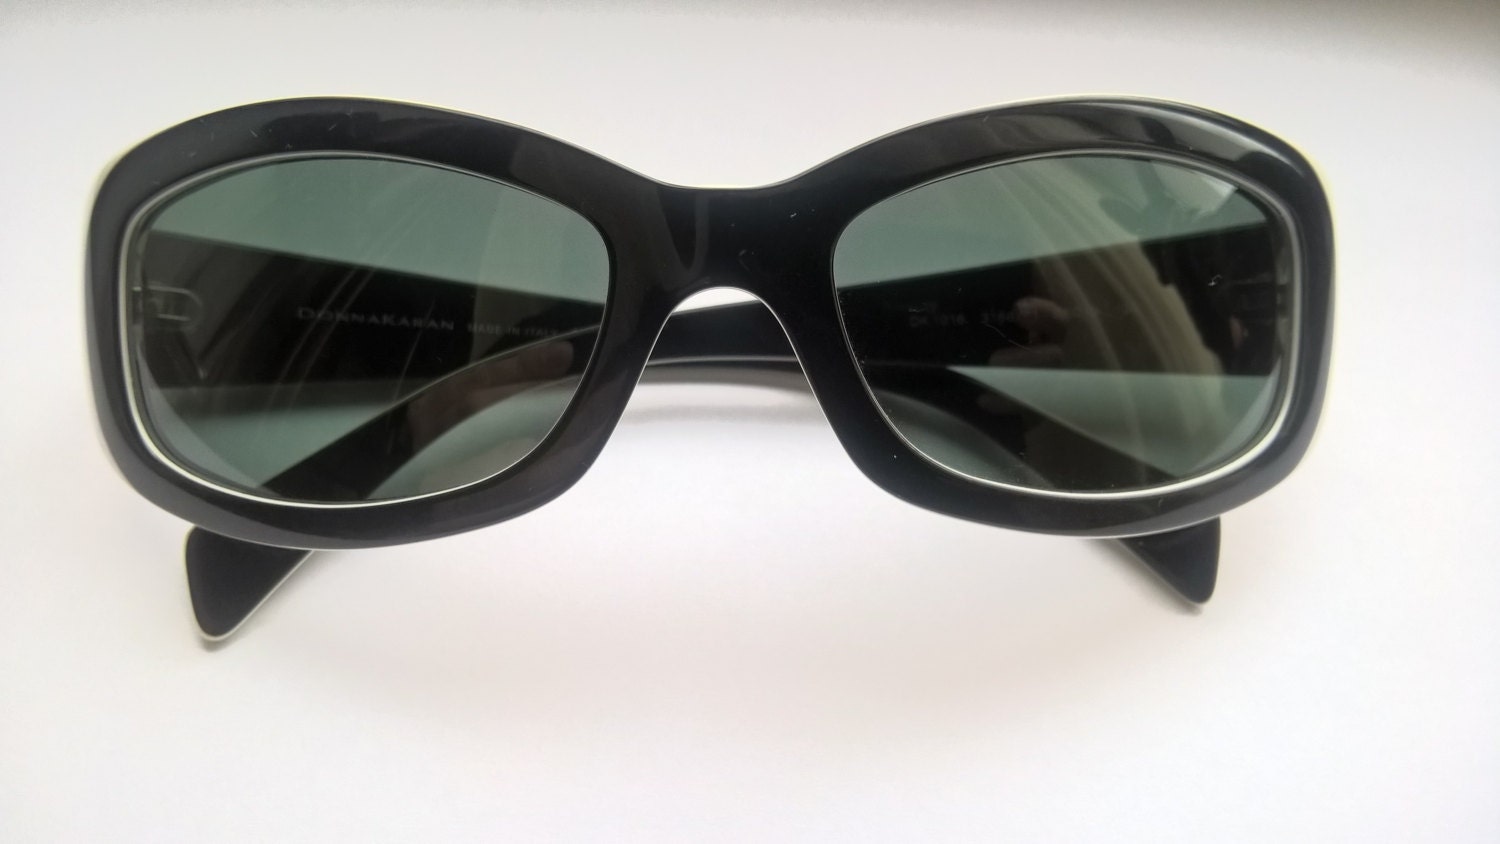 Vintage Donna Karan Women's Black and White Frame Dark Green Plastic Sunglasses